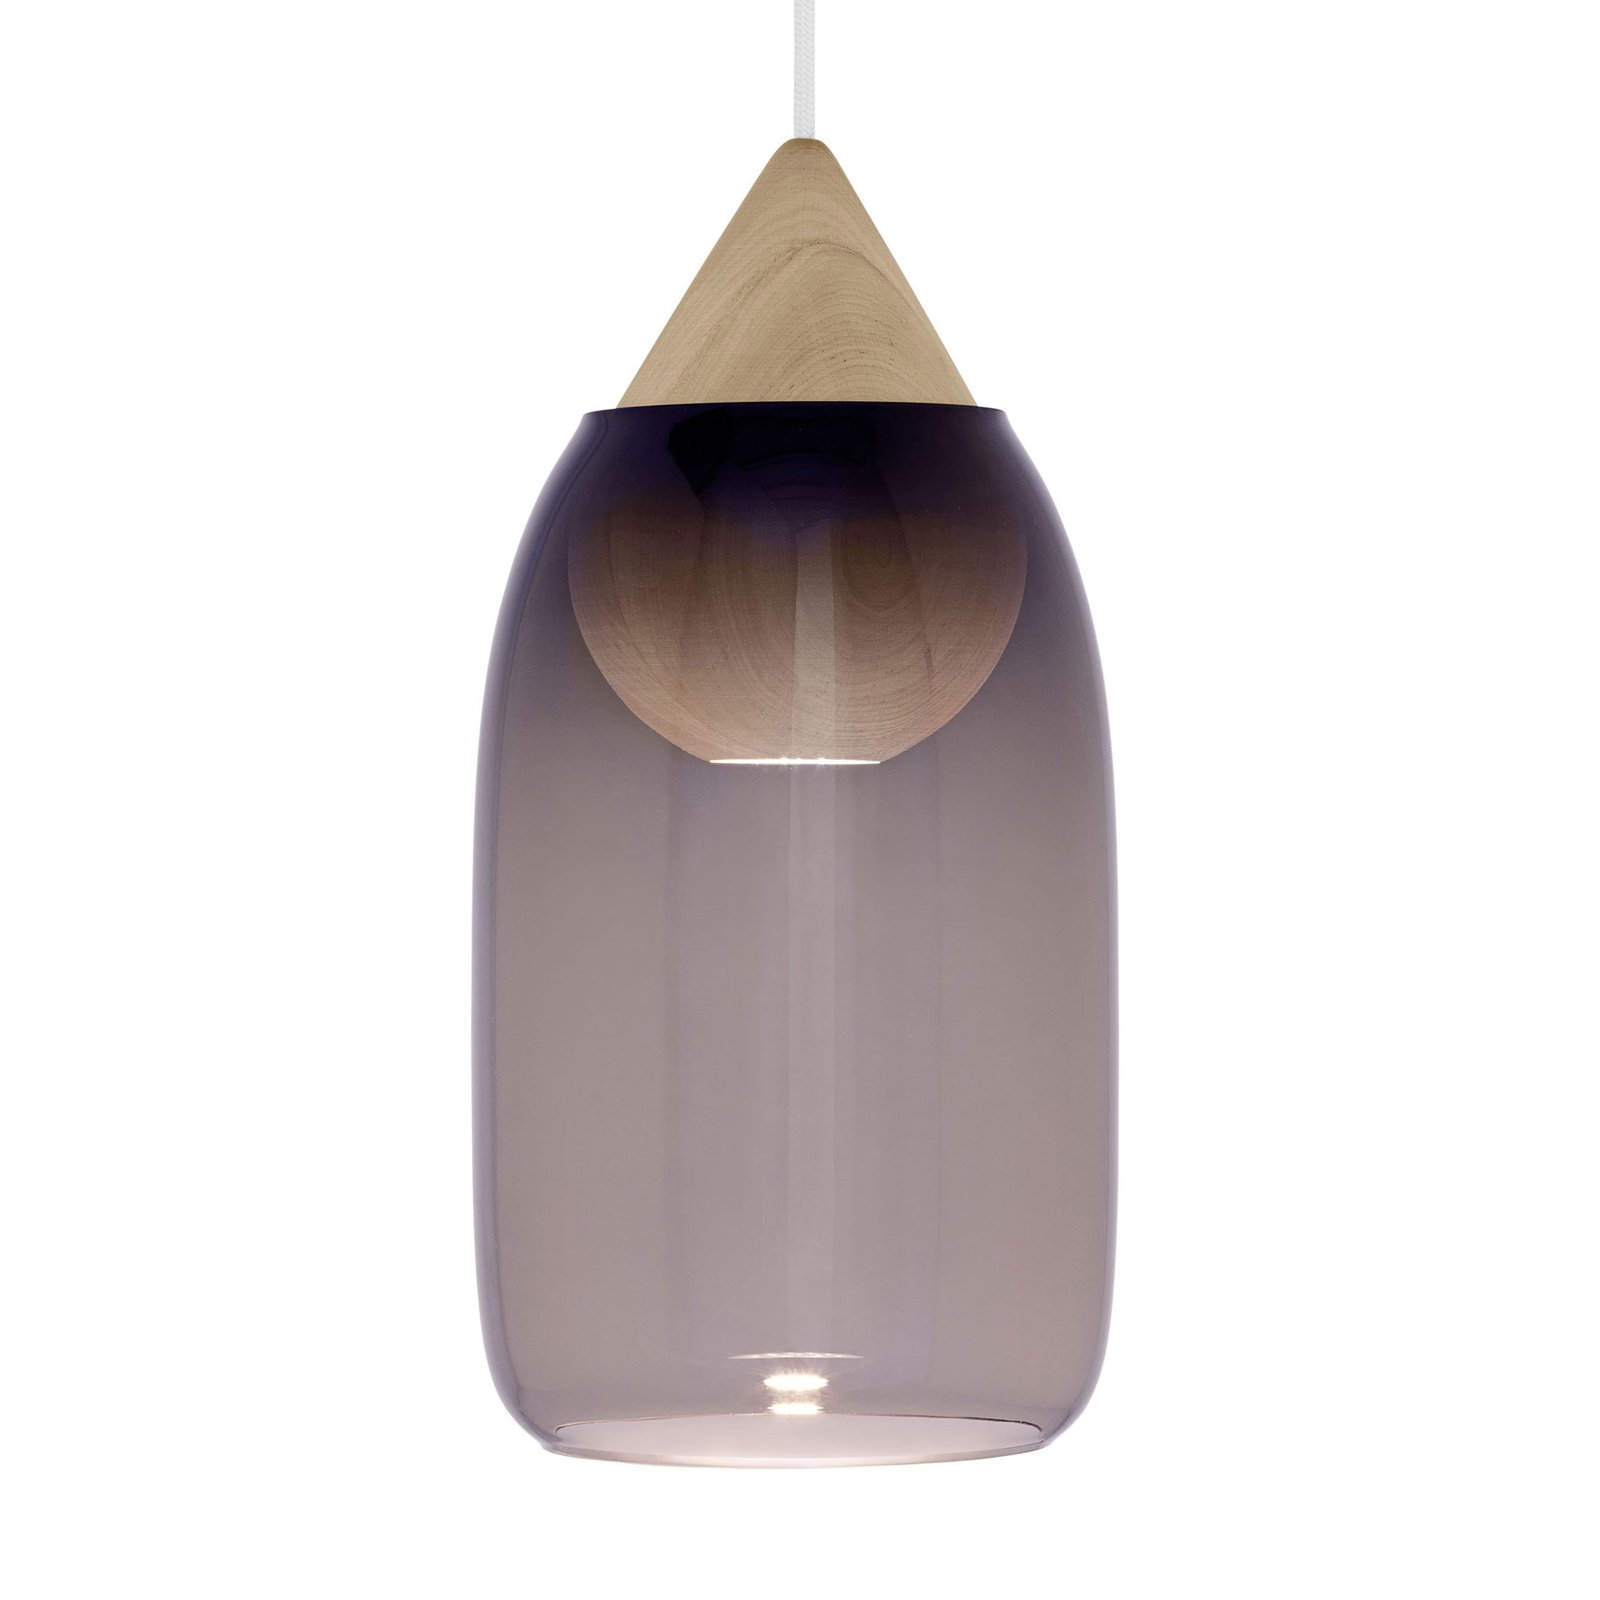 Mater Liuku Drop sosp legno naturale, vetro viola